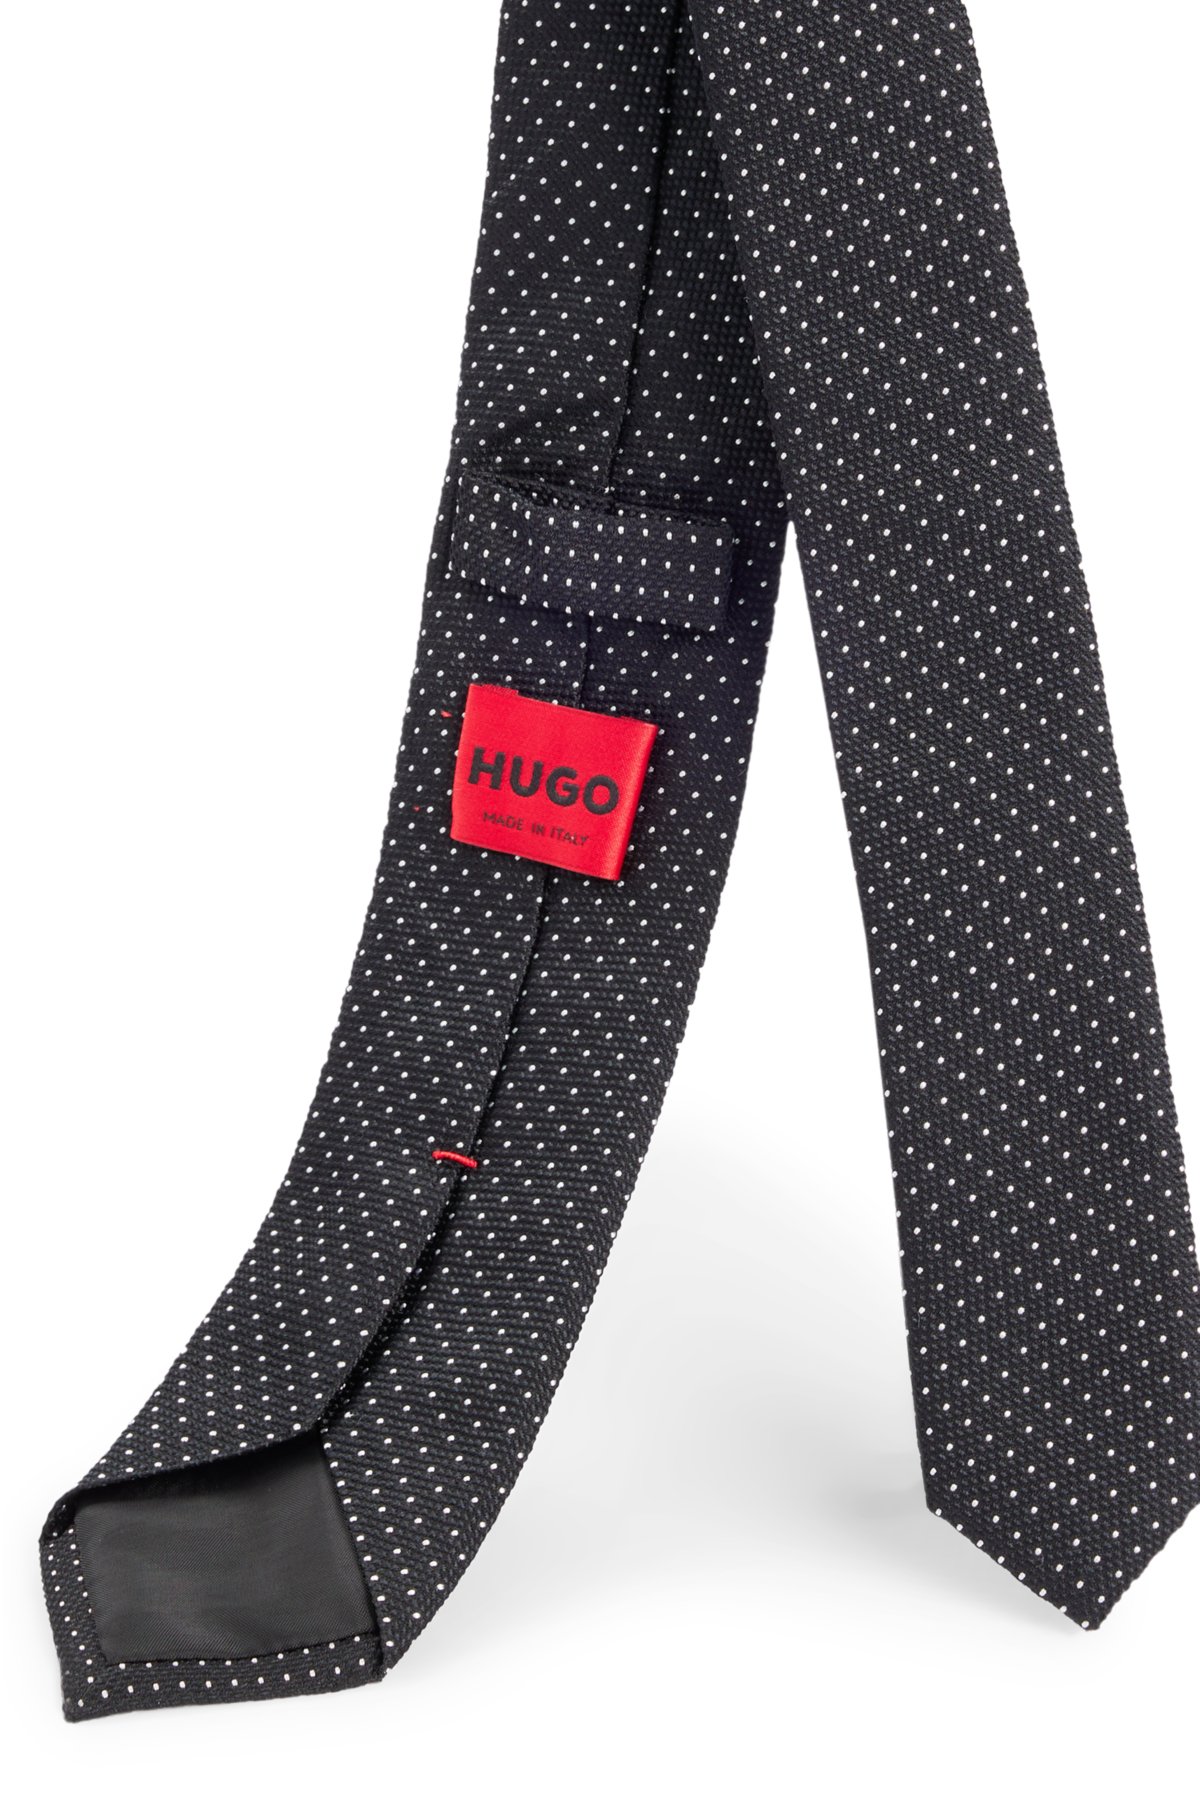 HUGO - Krawatte aus reiner Jacquard-Muster Seide mit